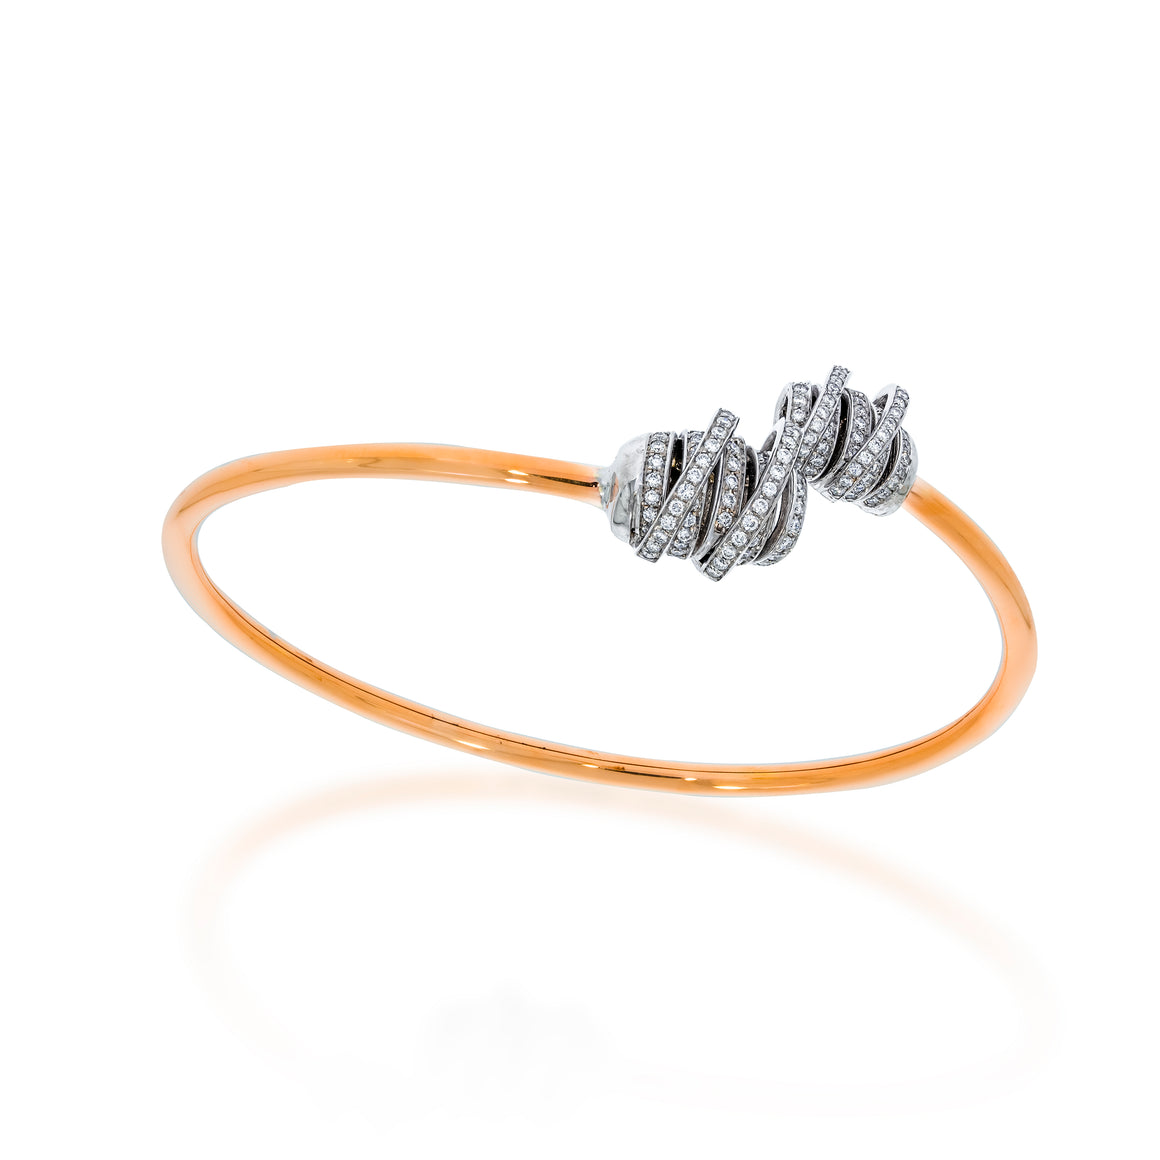 Magnificent design Spiral edges Diamonds Bangle, two color bangle.